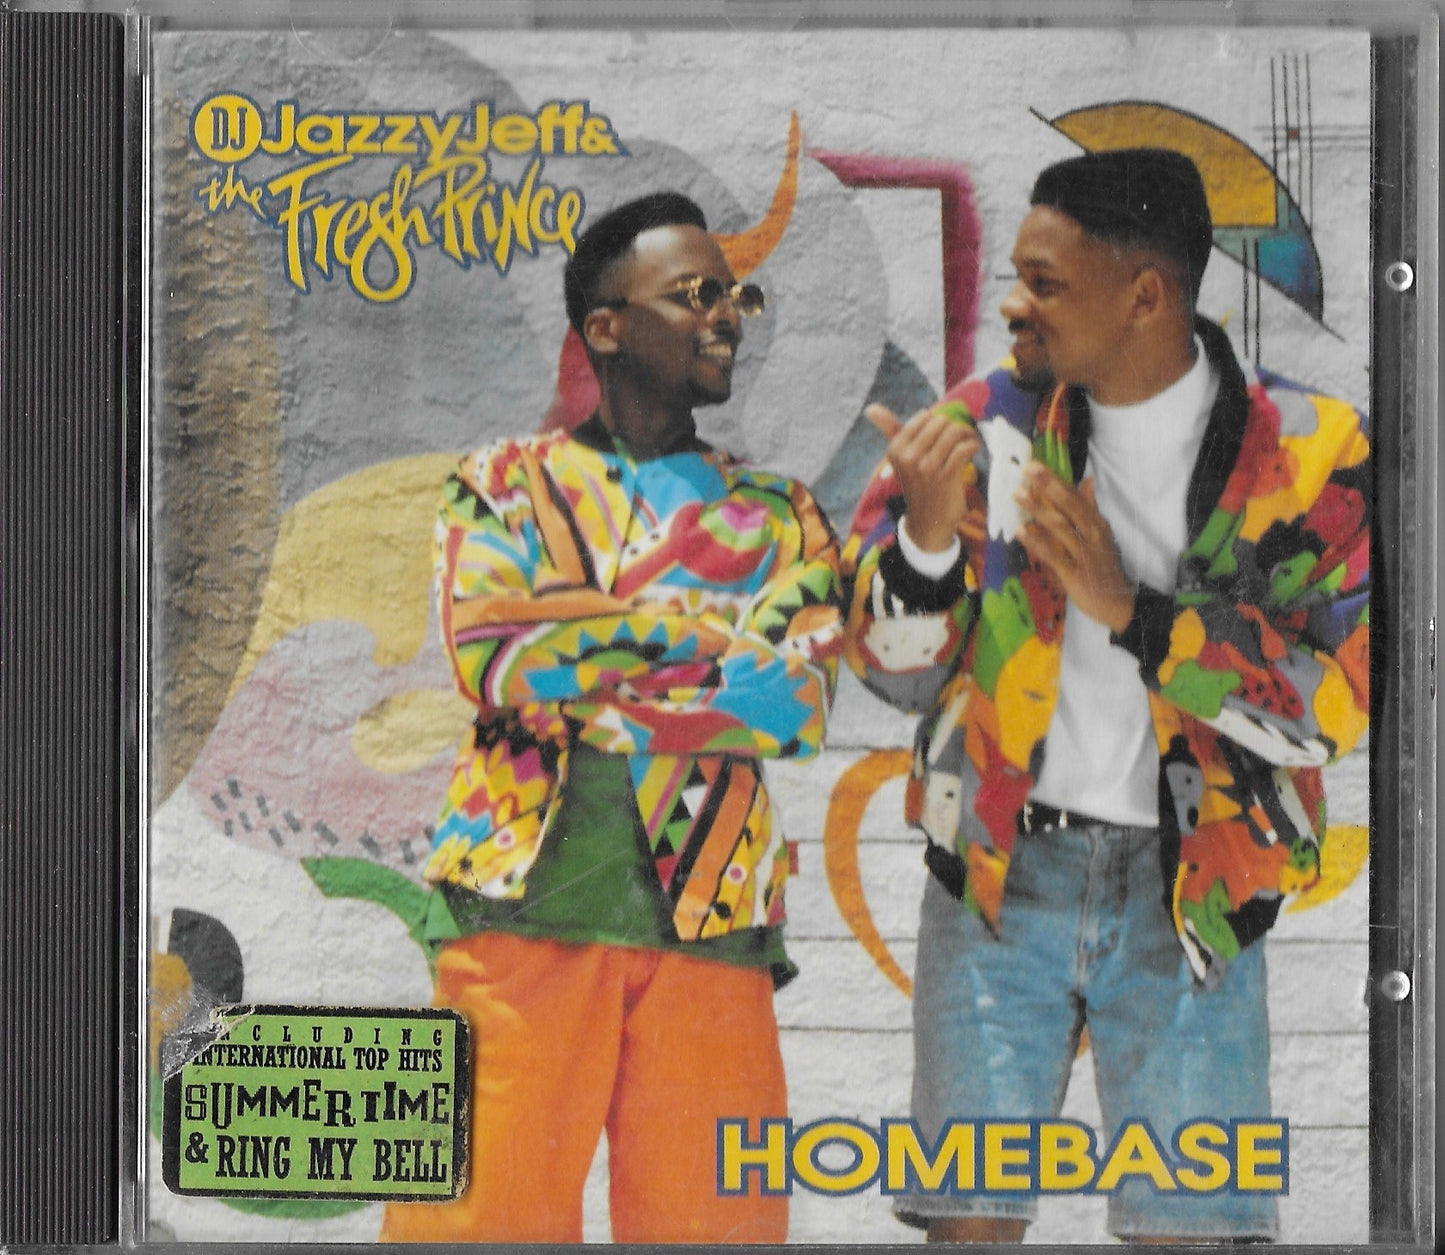 DJ JAZZY JEFF & THE FRESH PRINCE -Homebase